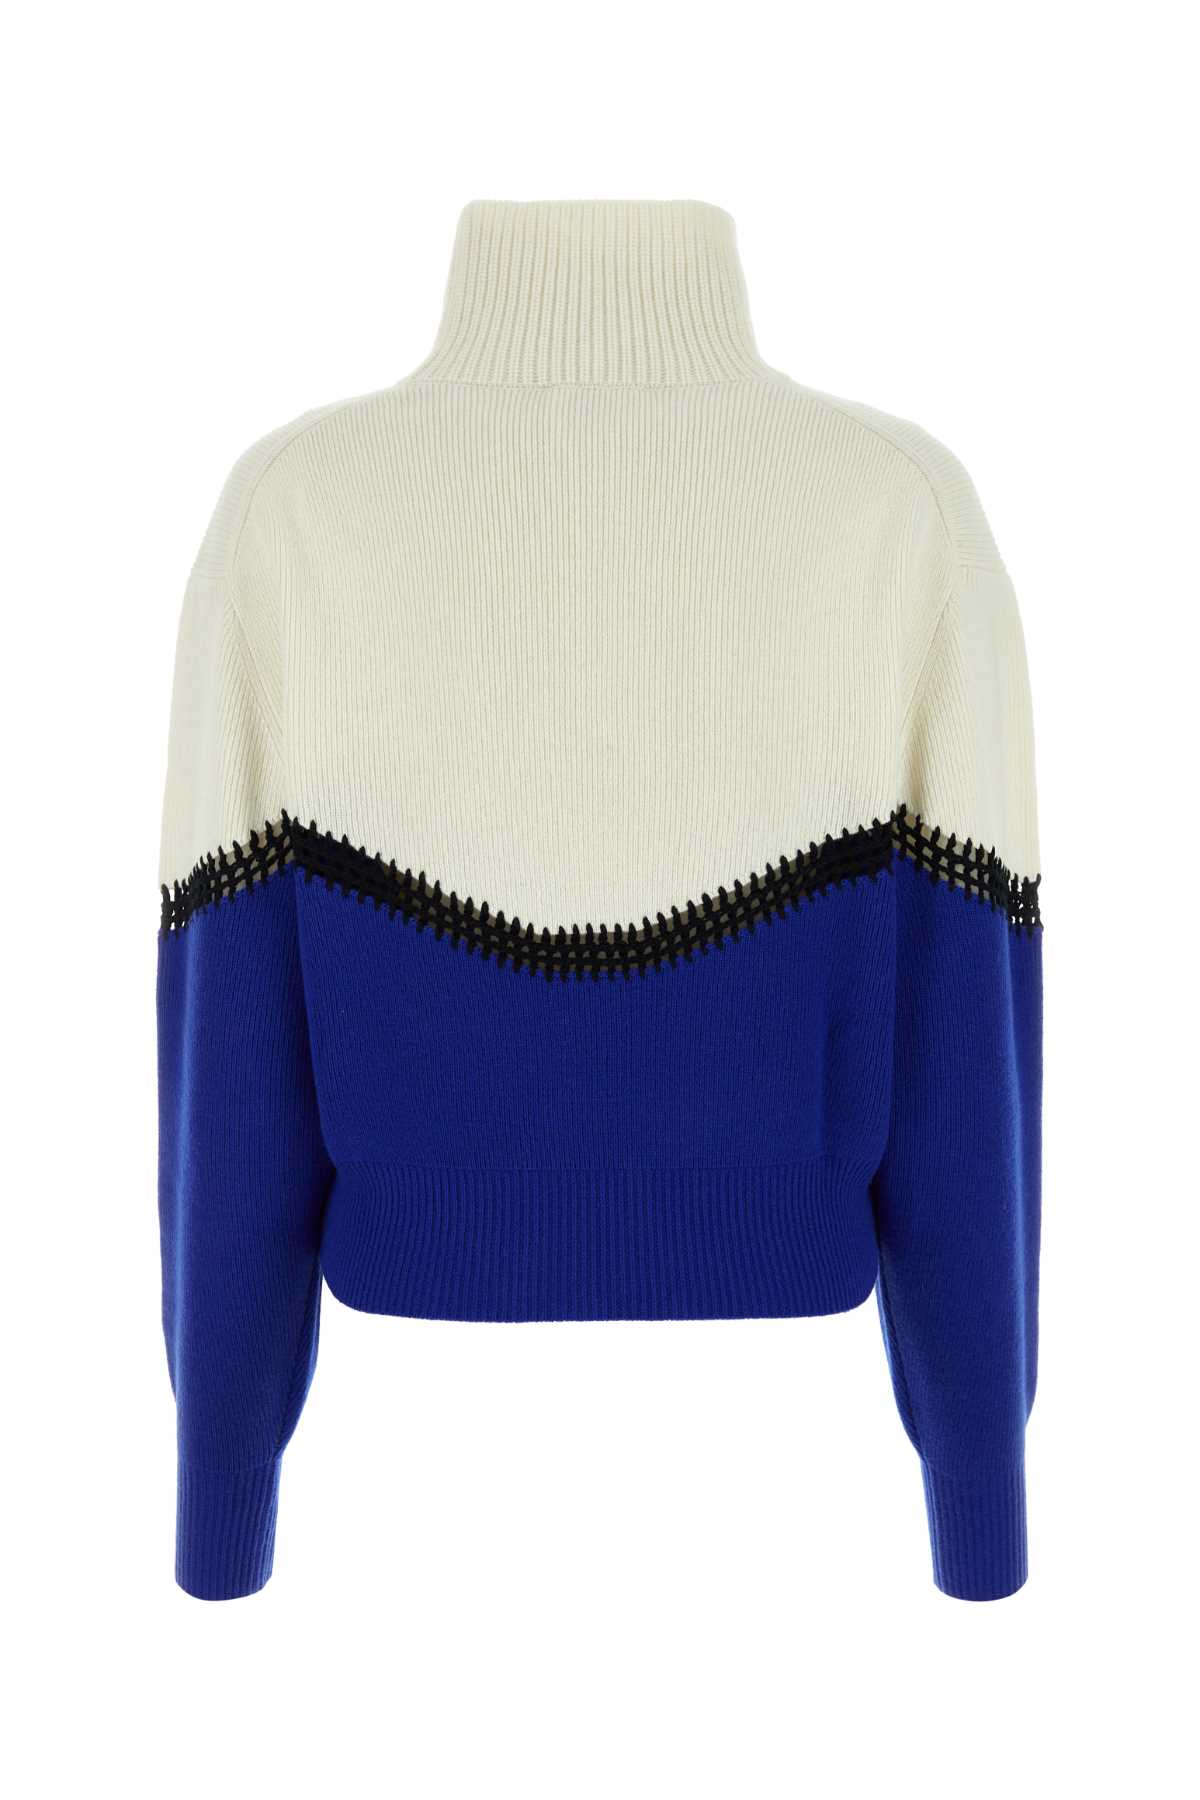 Chloé Two-tone Wool Blend Oversize Sweater In Freshindigo